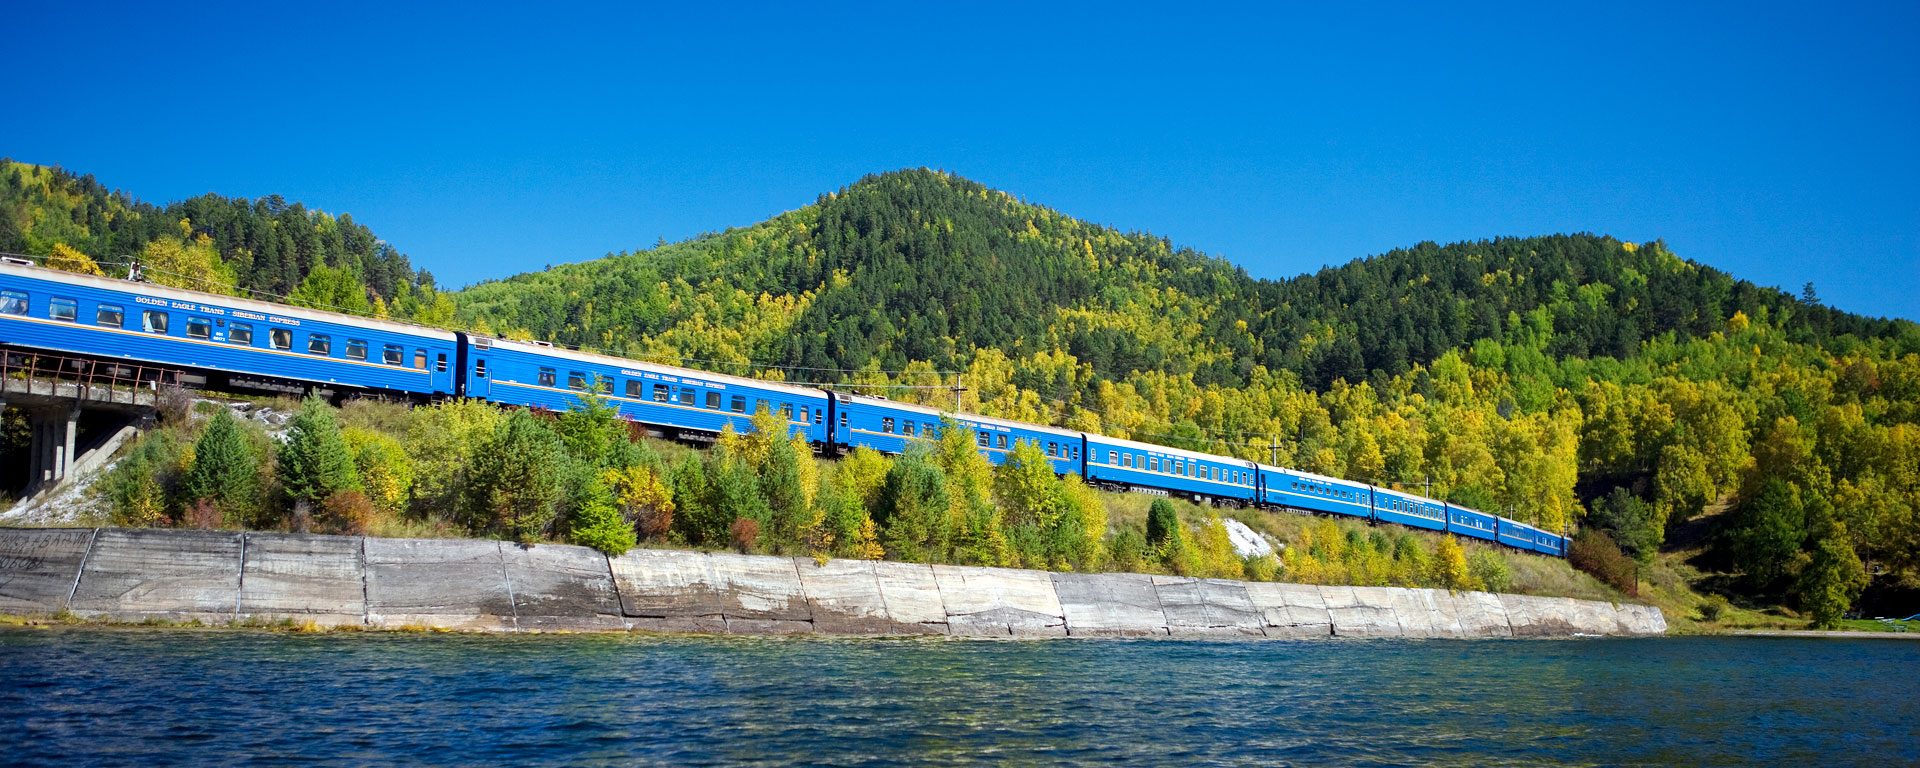 The Golden Eagle luxury train travels past Lake Baikal, Siberia, Russia